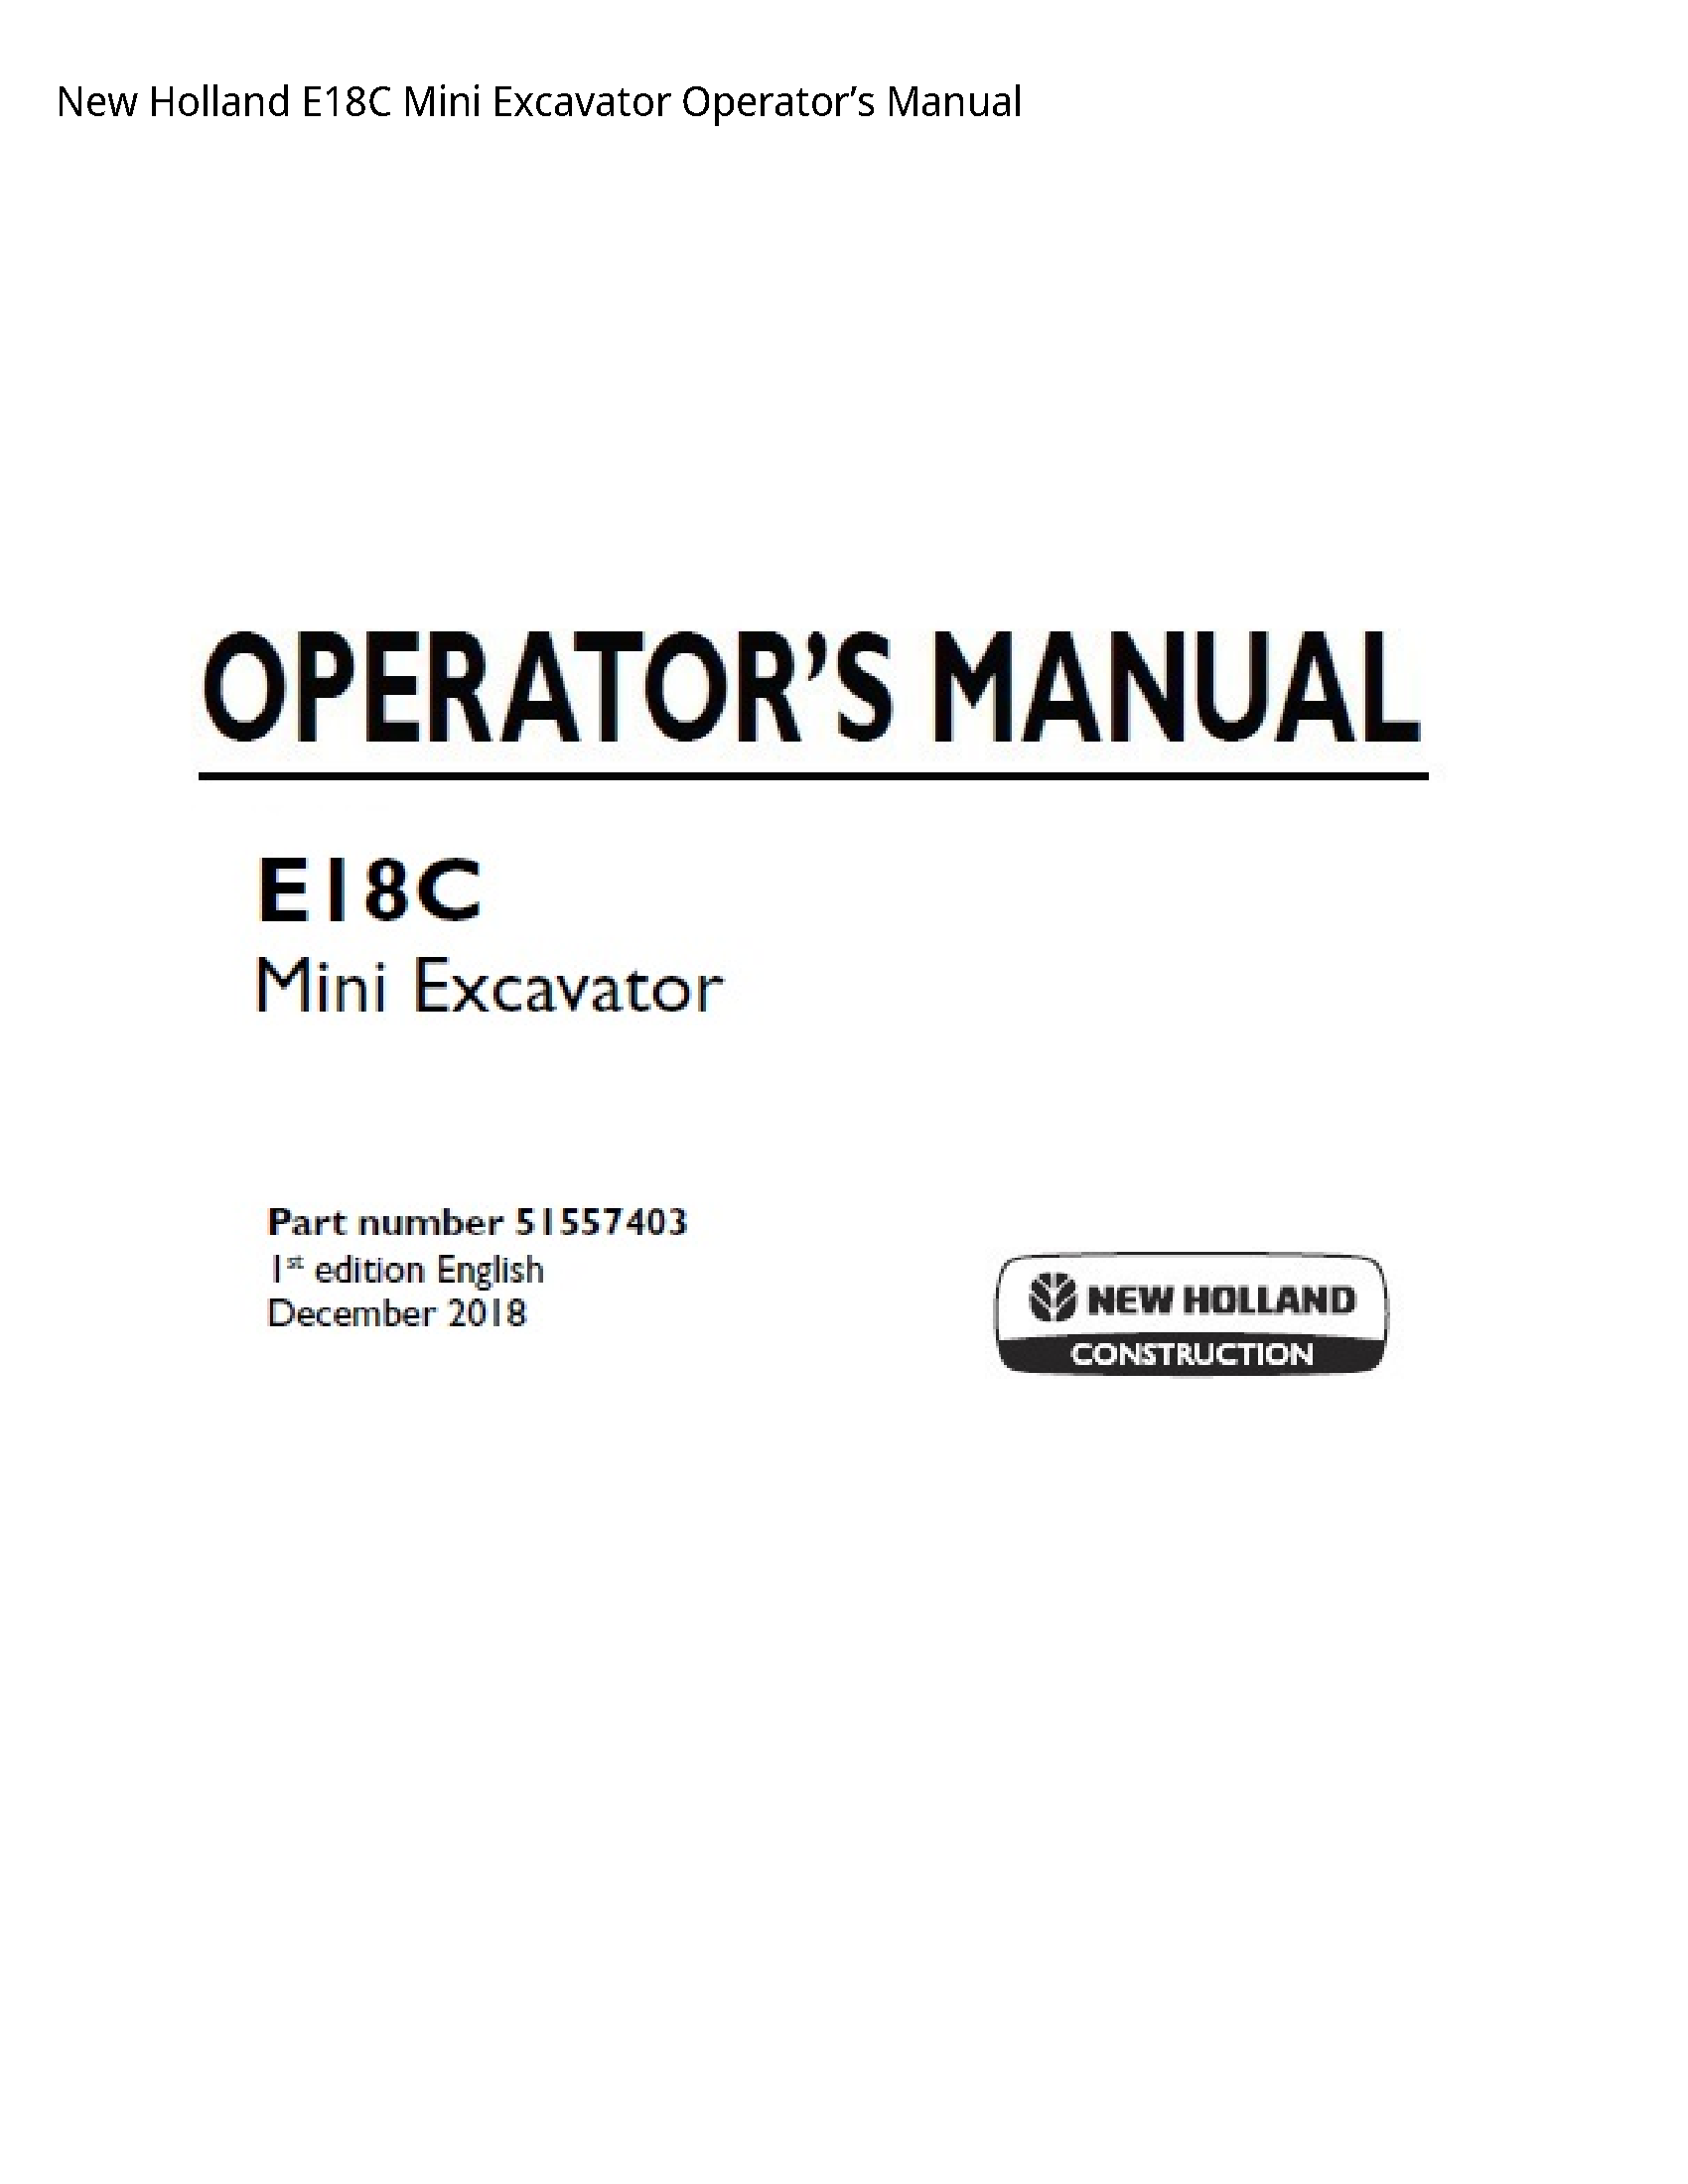 New Holland E18C Mini Excavator Operator’s manual